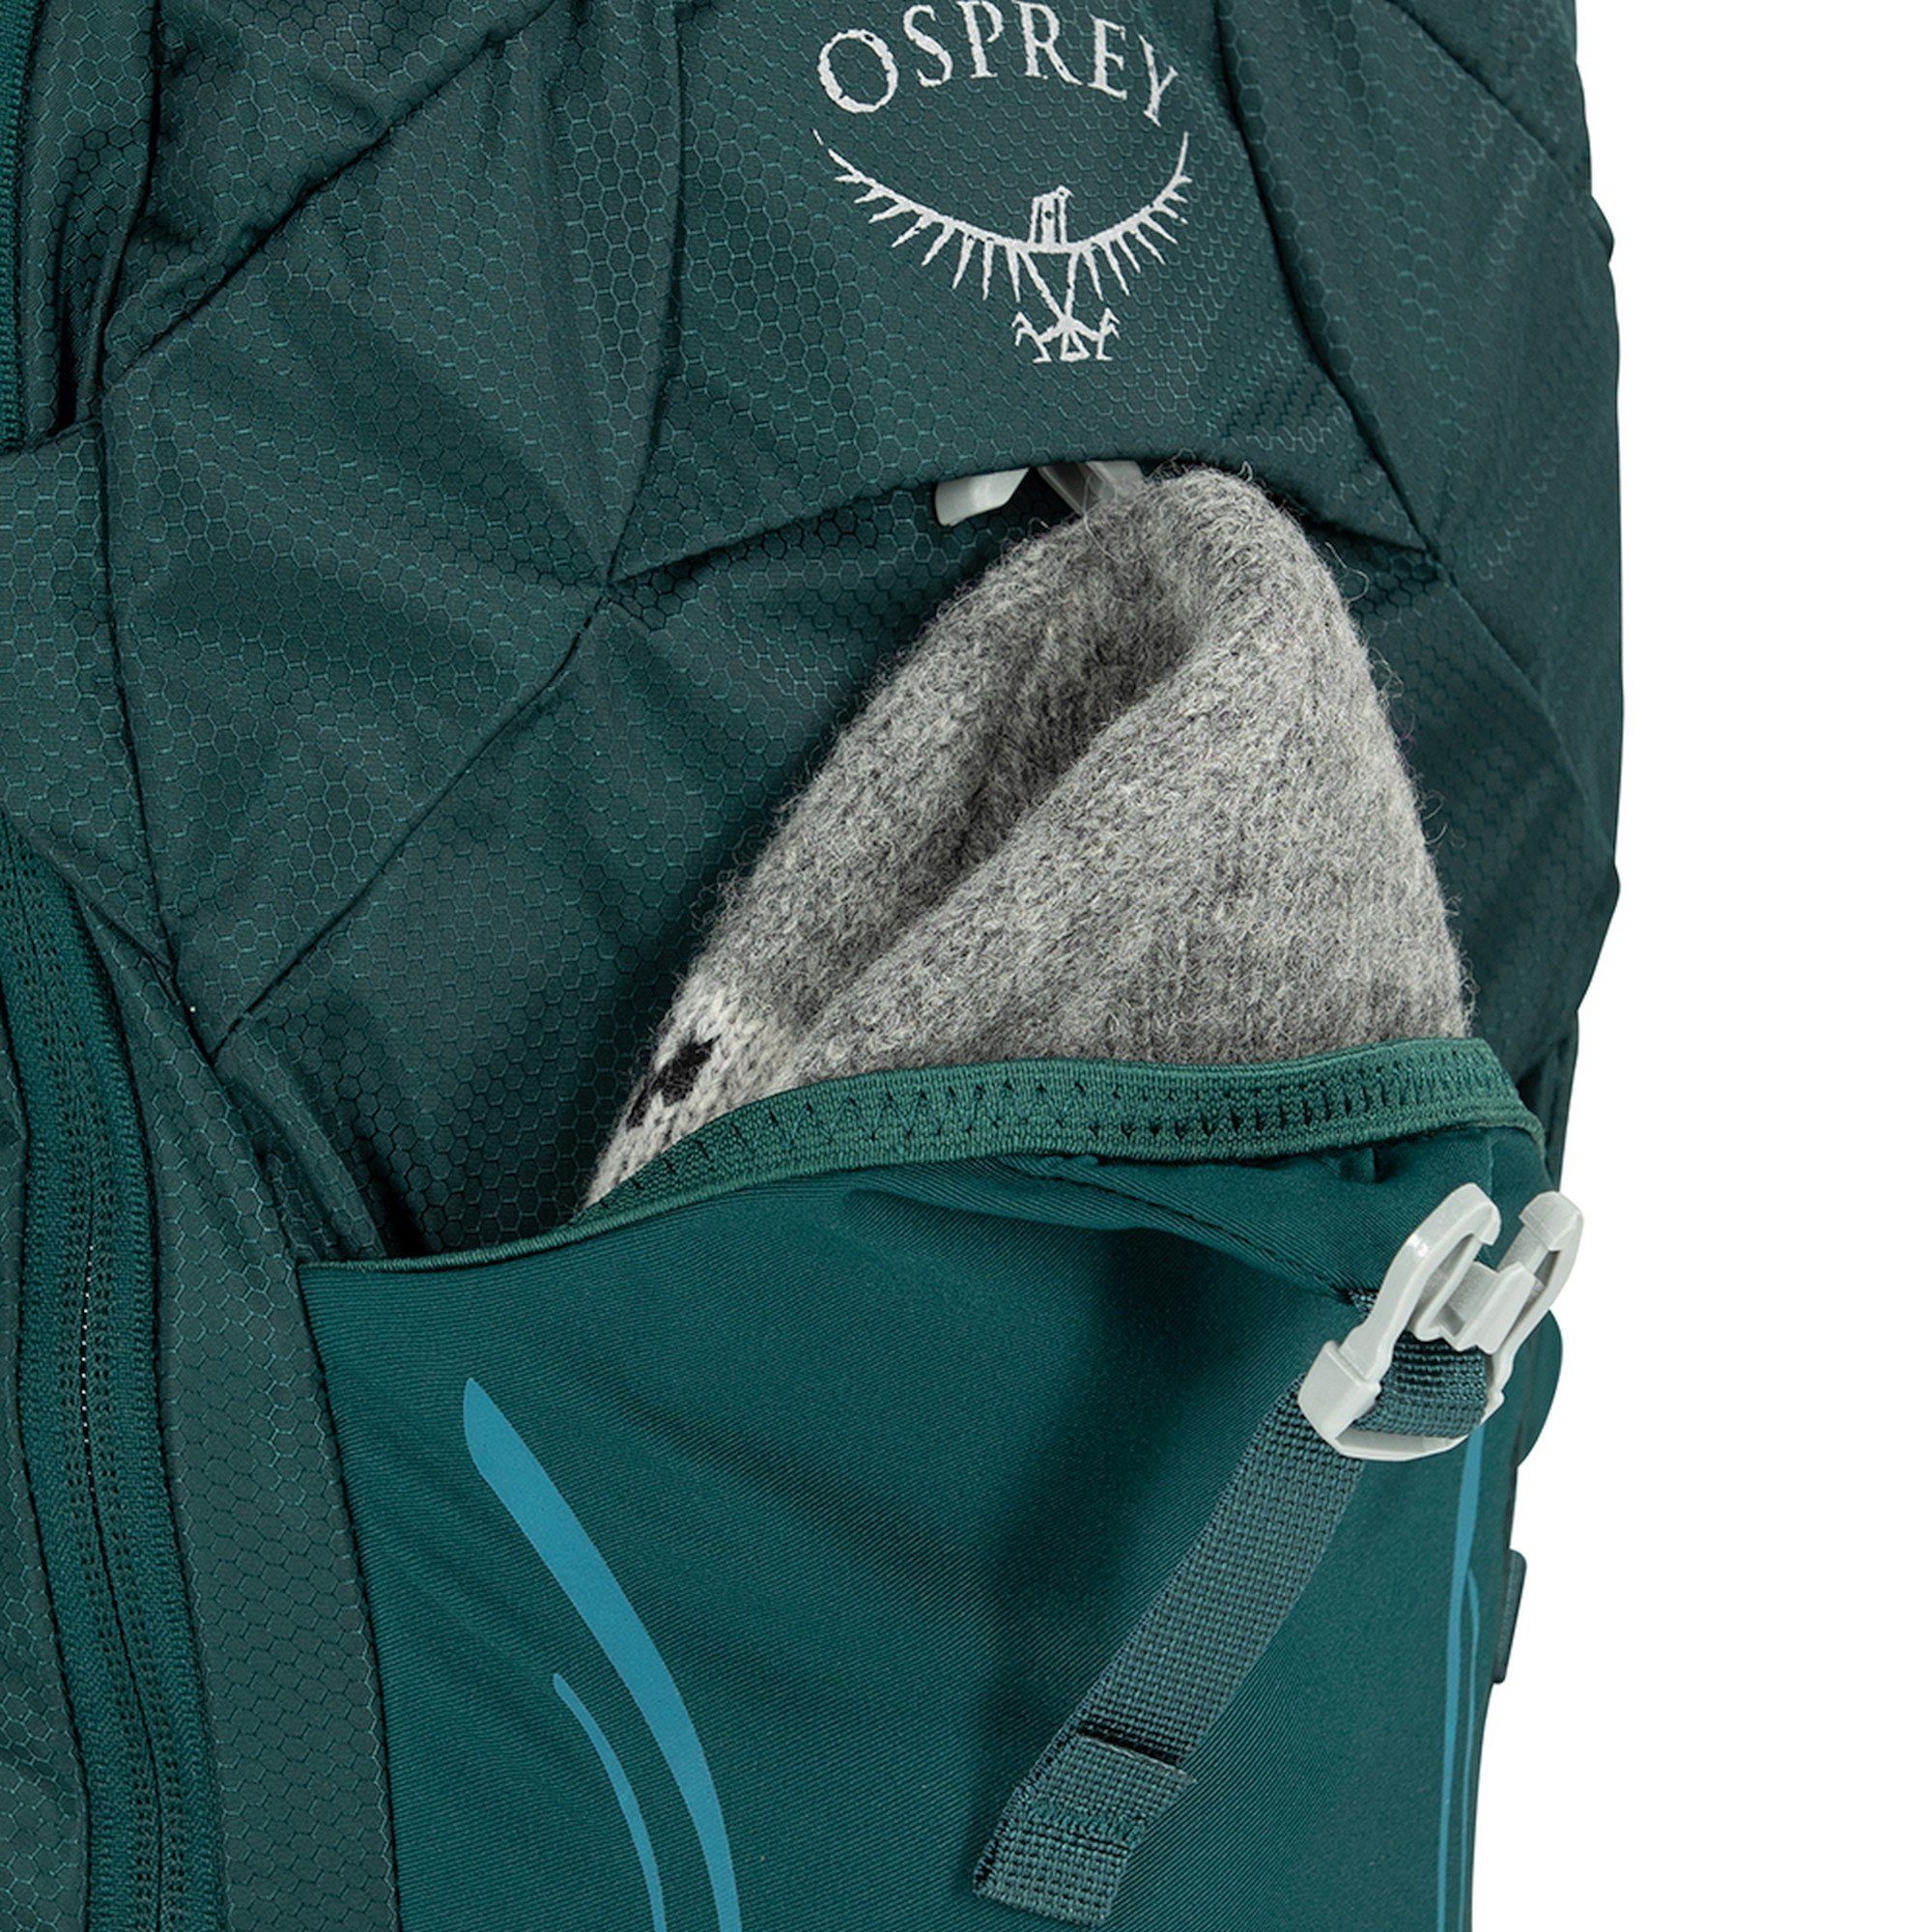 Osprey Sportrucksack baikal Sylva 12 green 46cm Women - Fahradrucksack